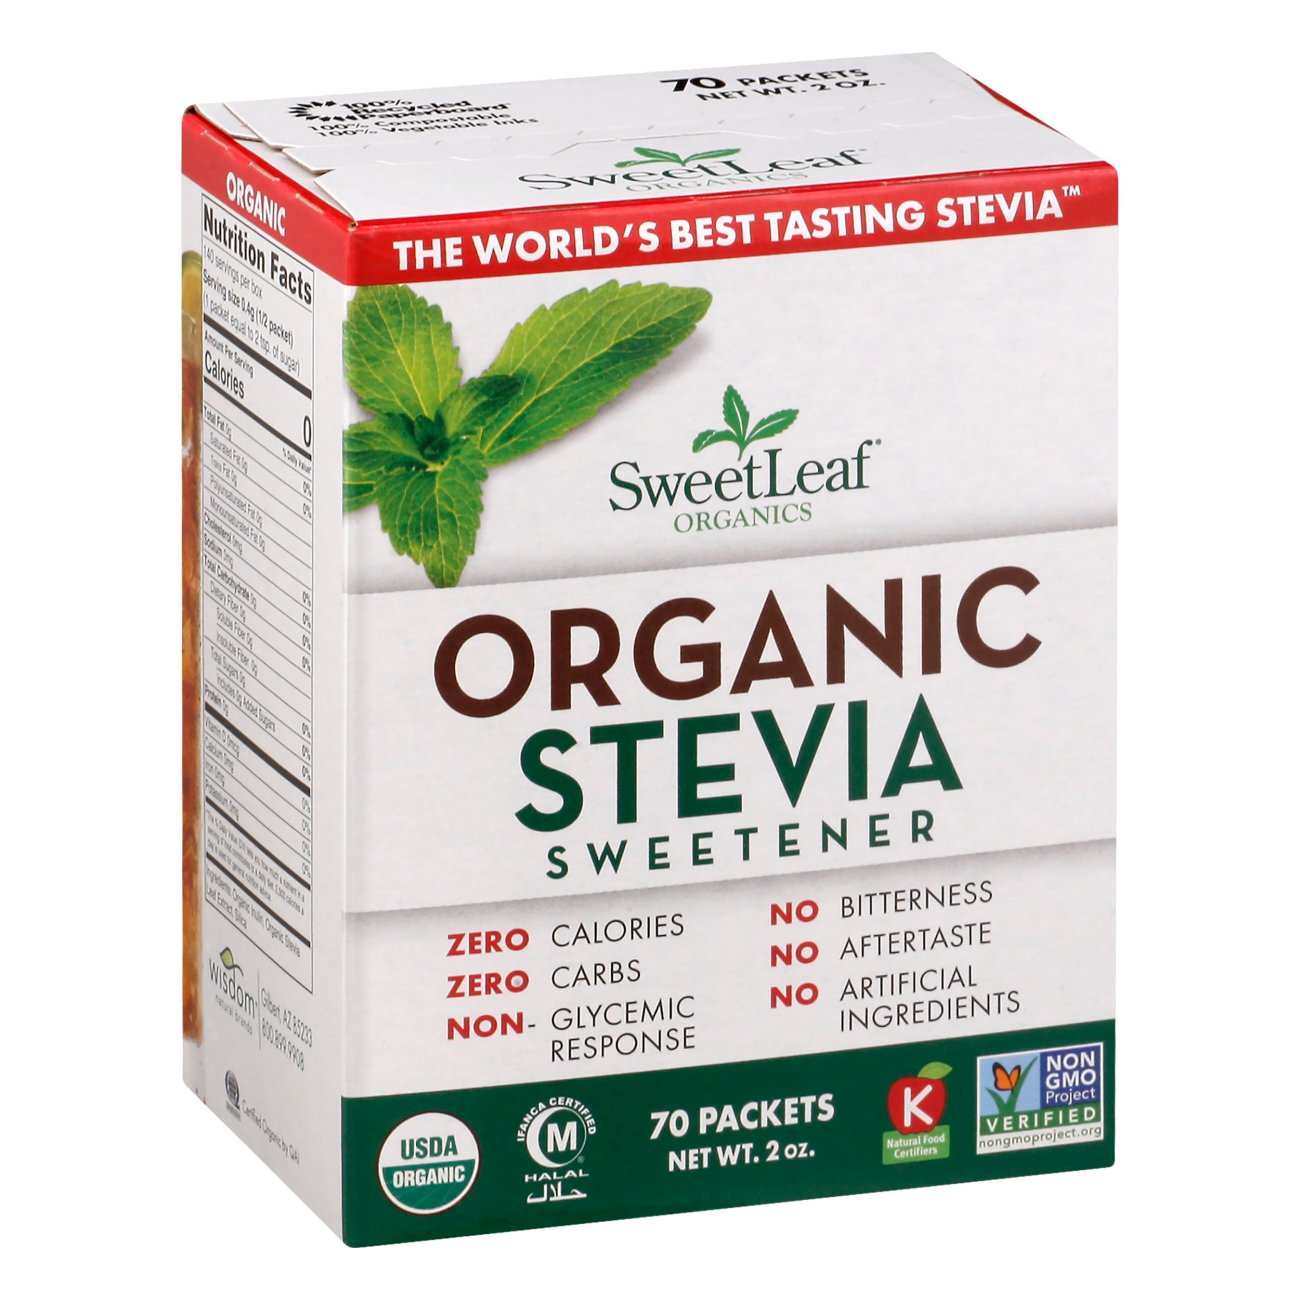 H-E-B Stevia Extract Packets - Shop Sugar Substitutes at H-E-B